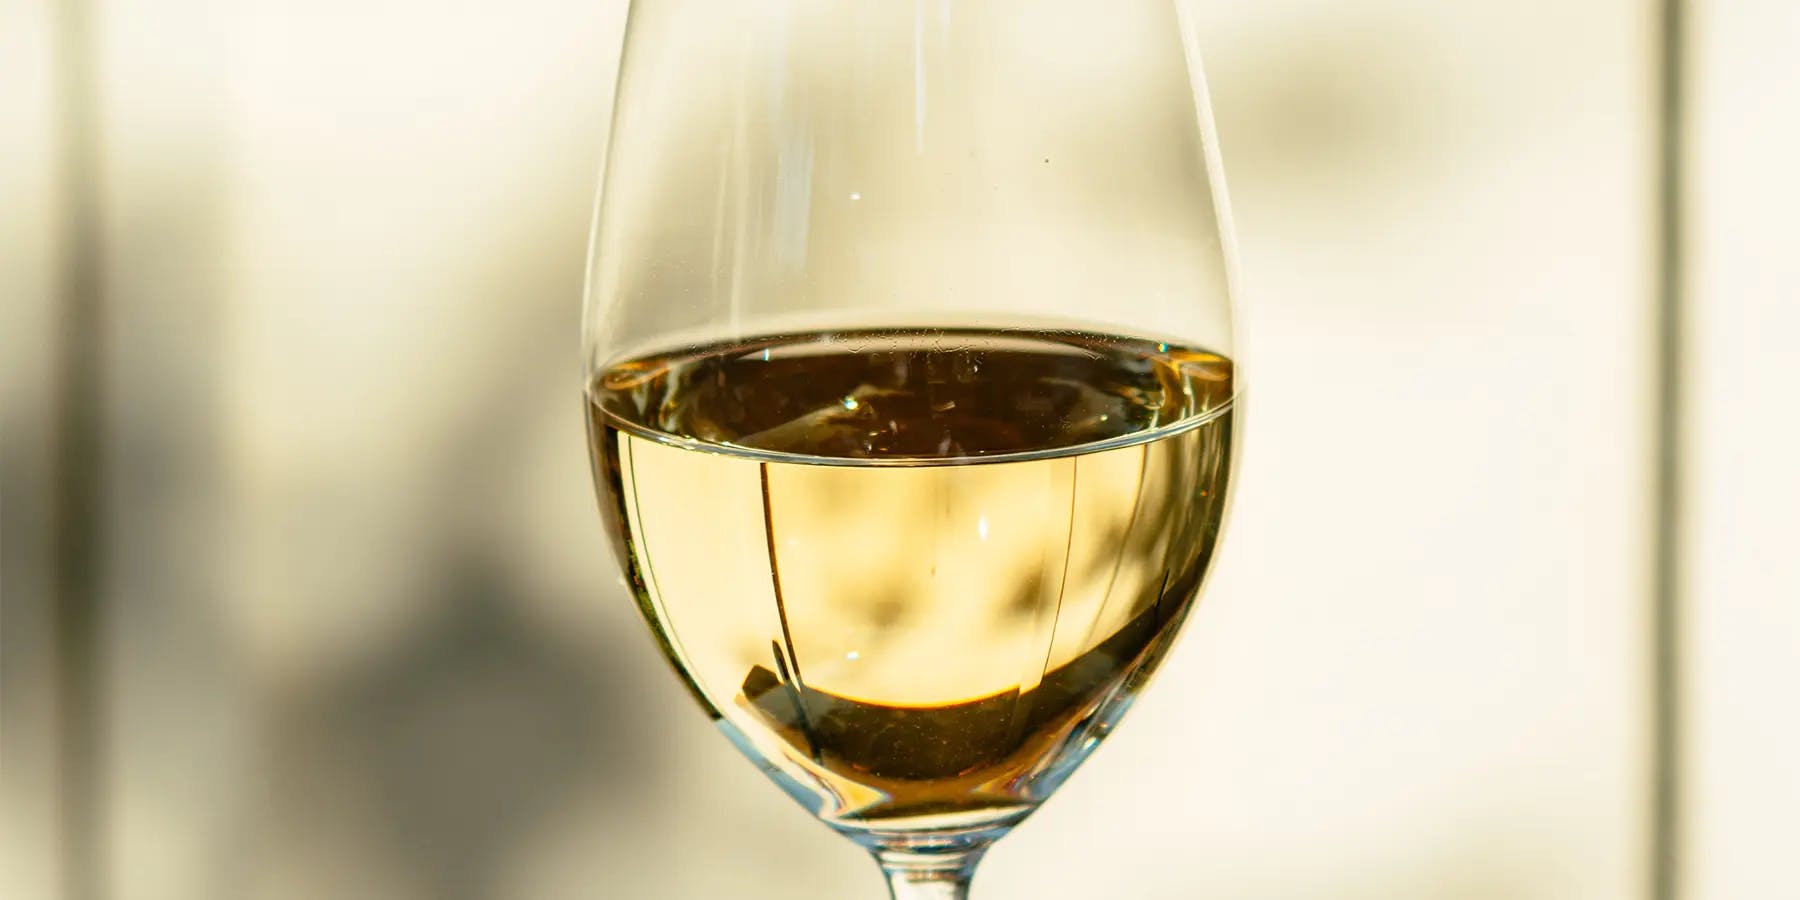 Le Sauvignon Blanc : un cépage phare de la viticulture mondiale